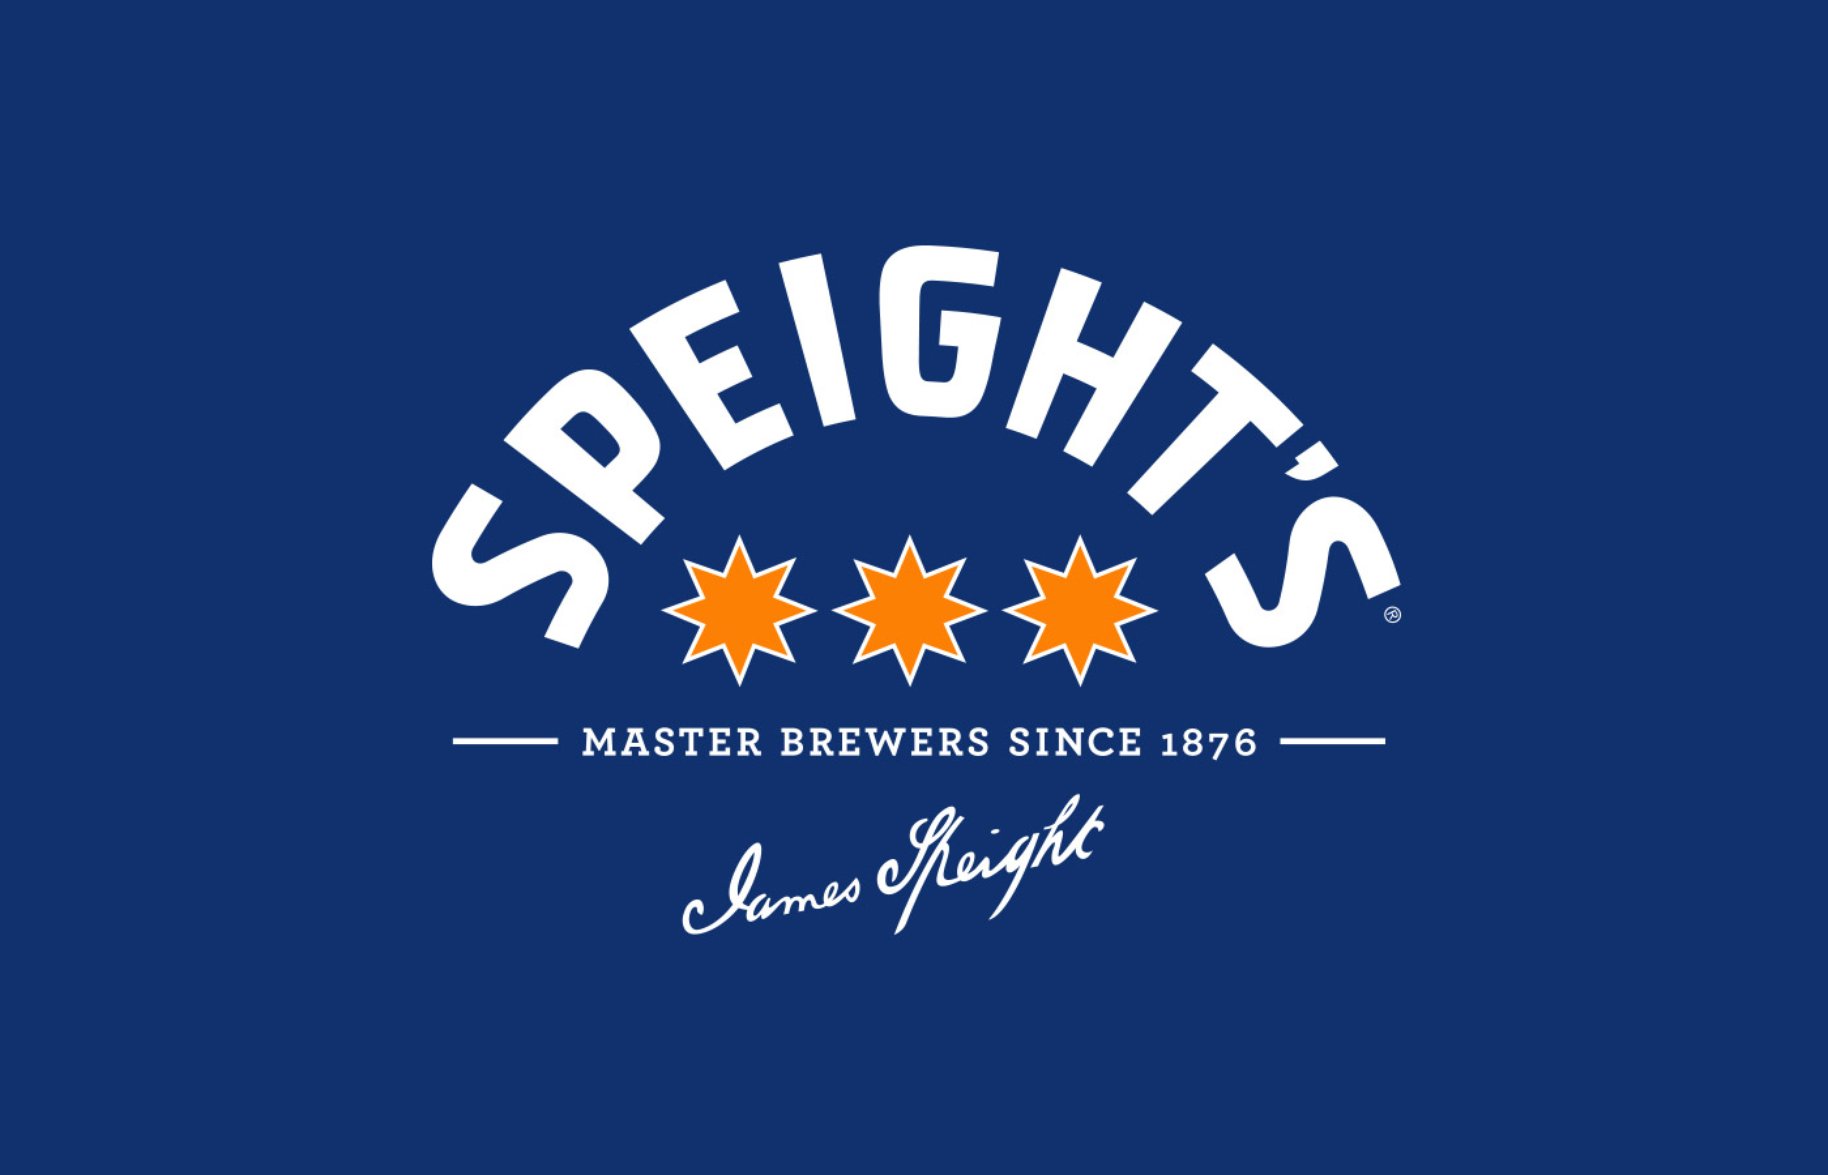 Speight's logo blue background 